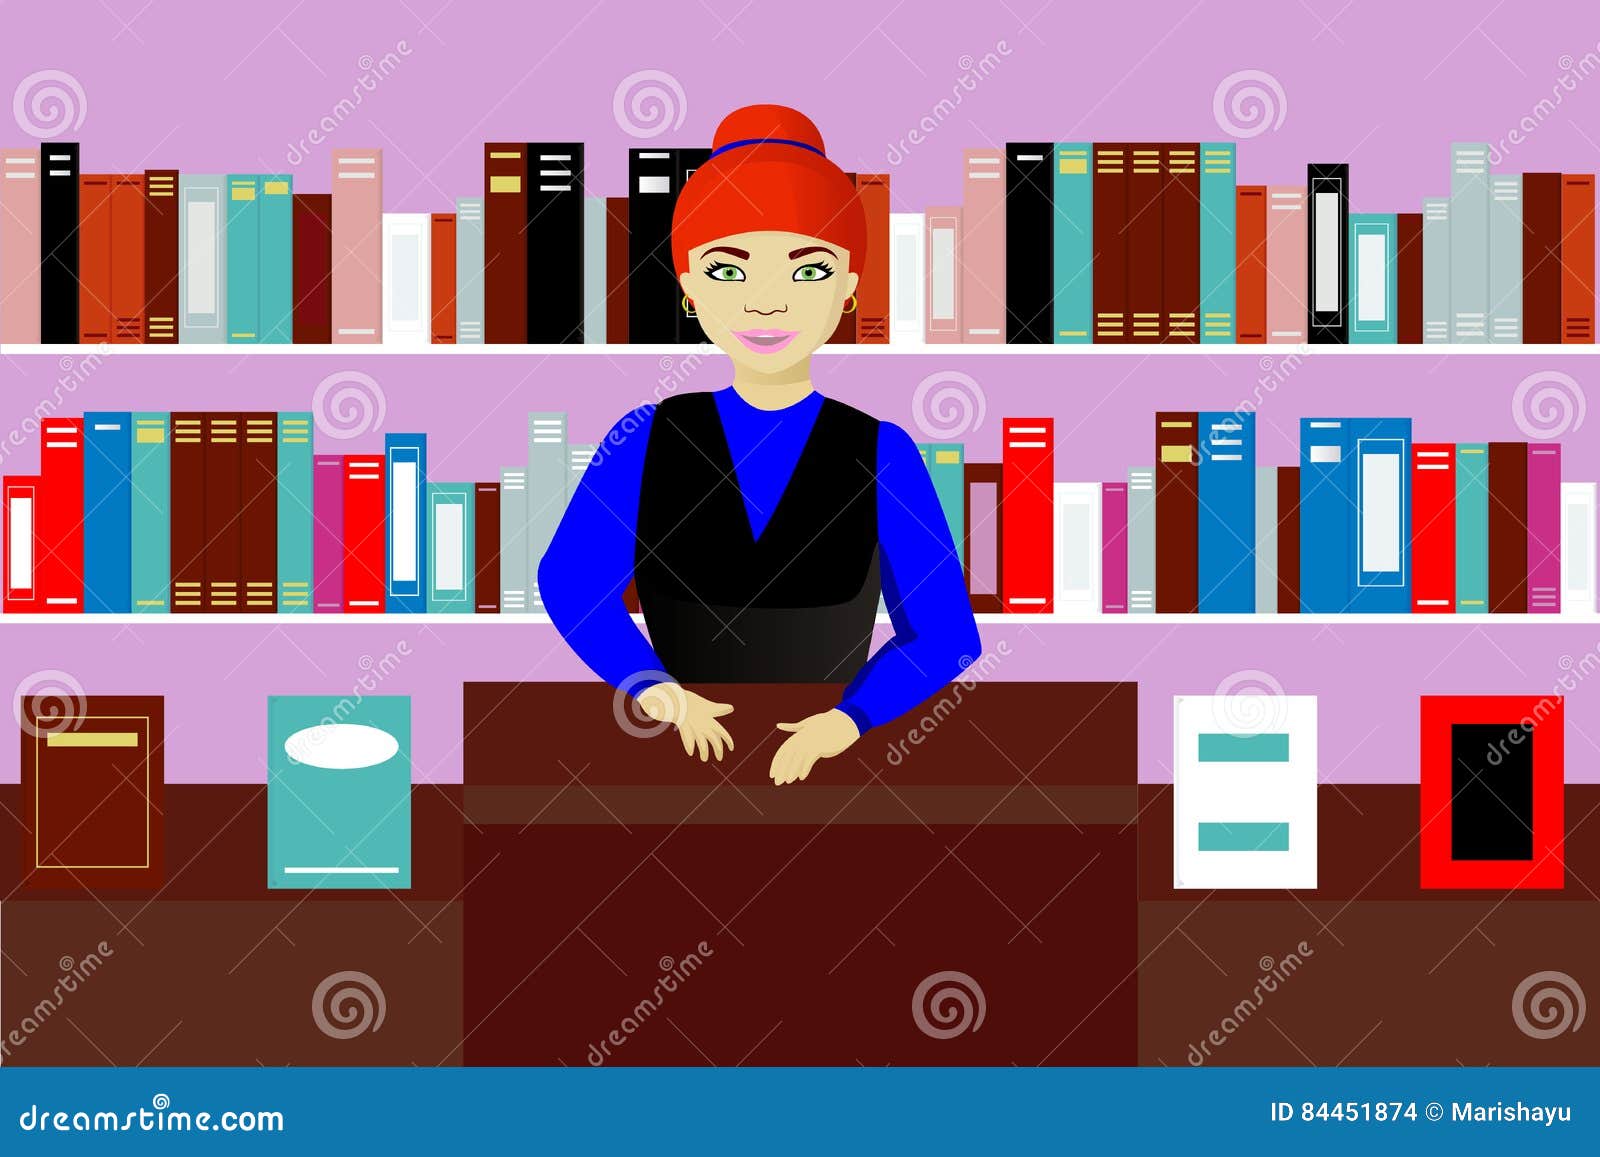 seller in book shop